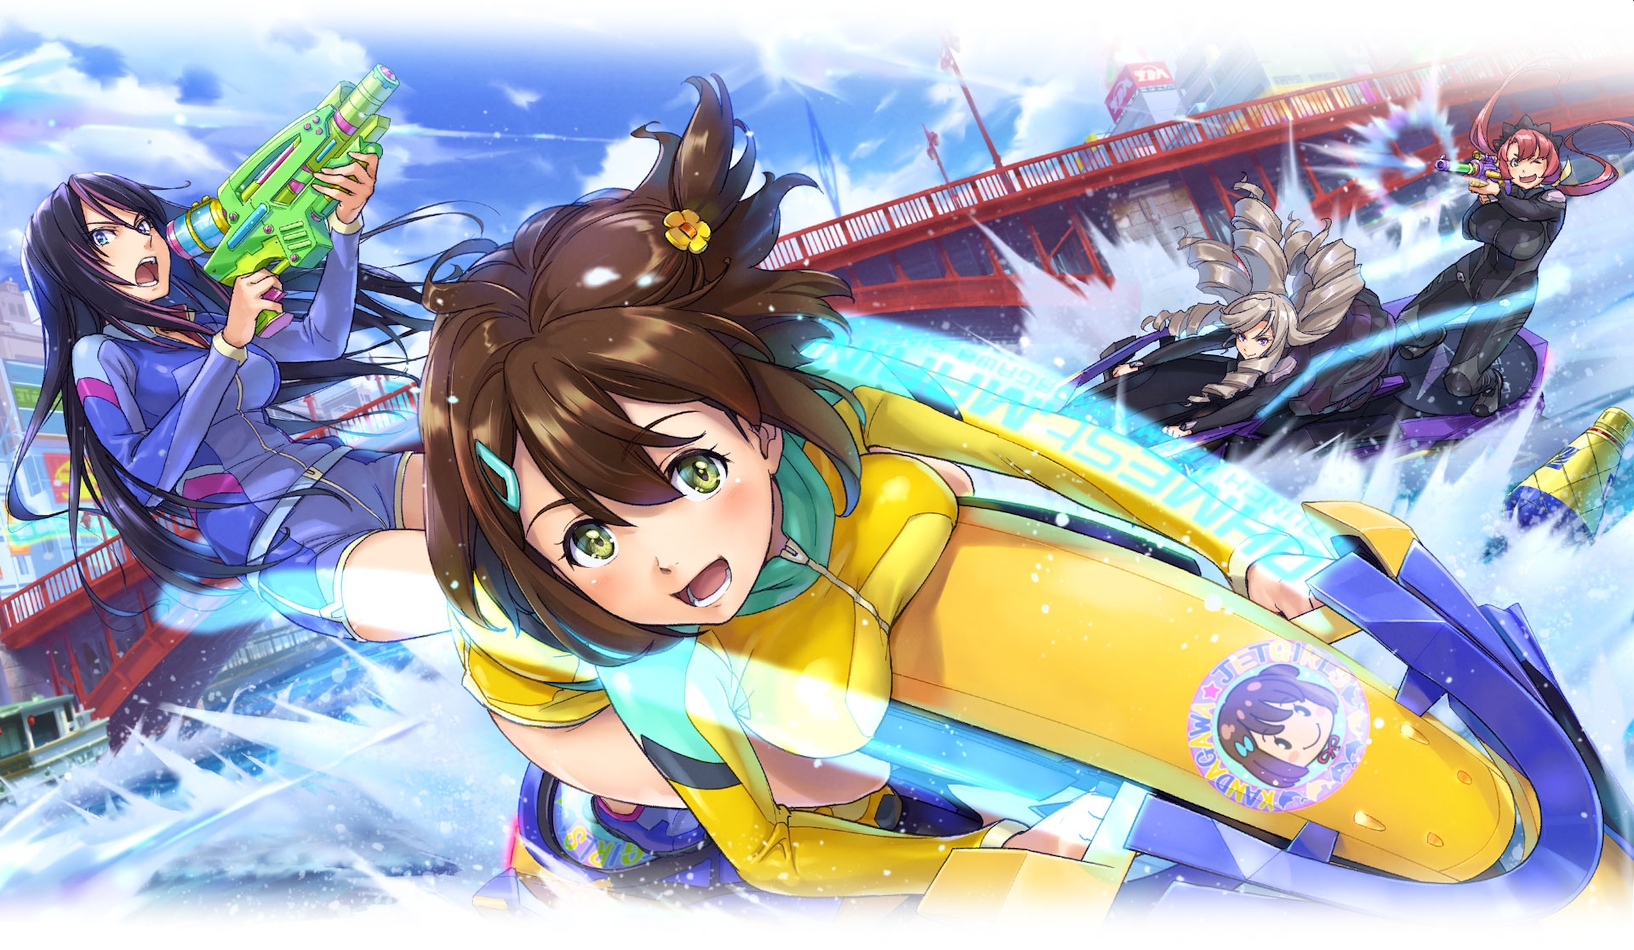 Kandagawa Jet Girls Senran Kagura Character Pass DLC Now Available On PC And PlayStation 4